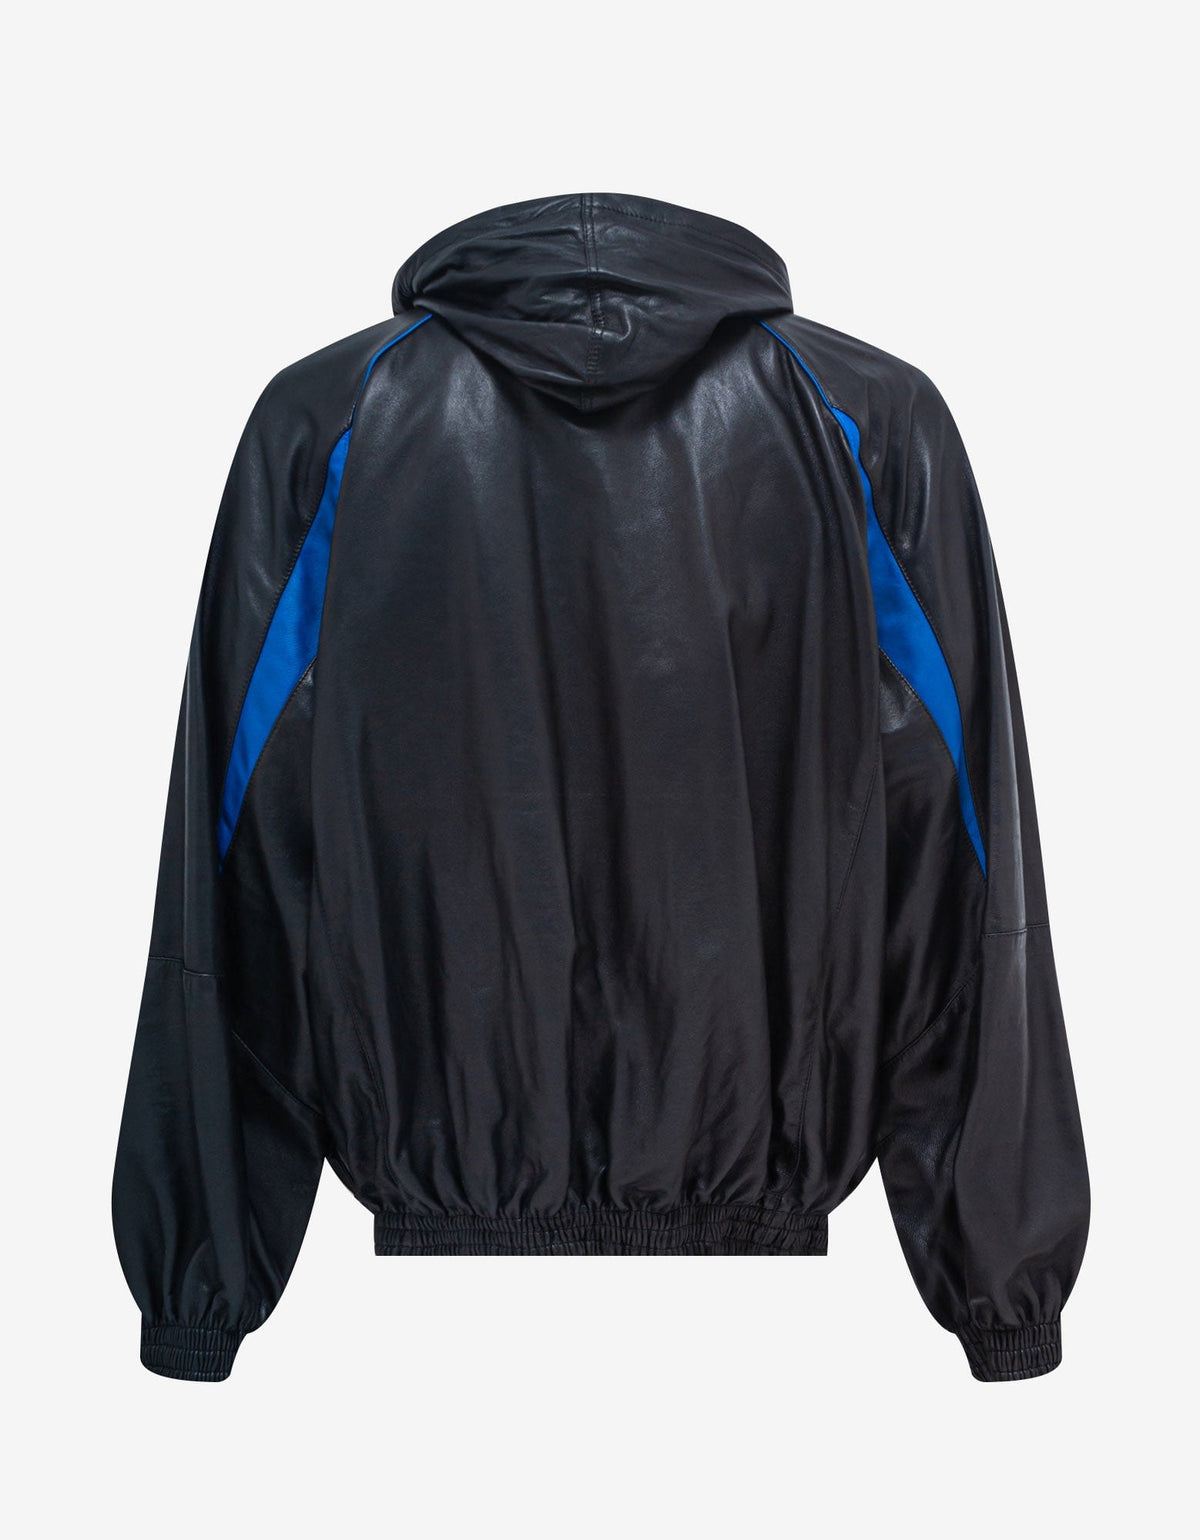 Balenciaga Black 3B Sports Icon Leather Jacket